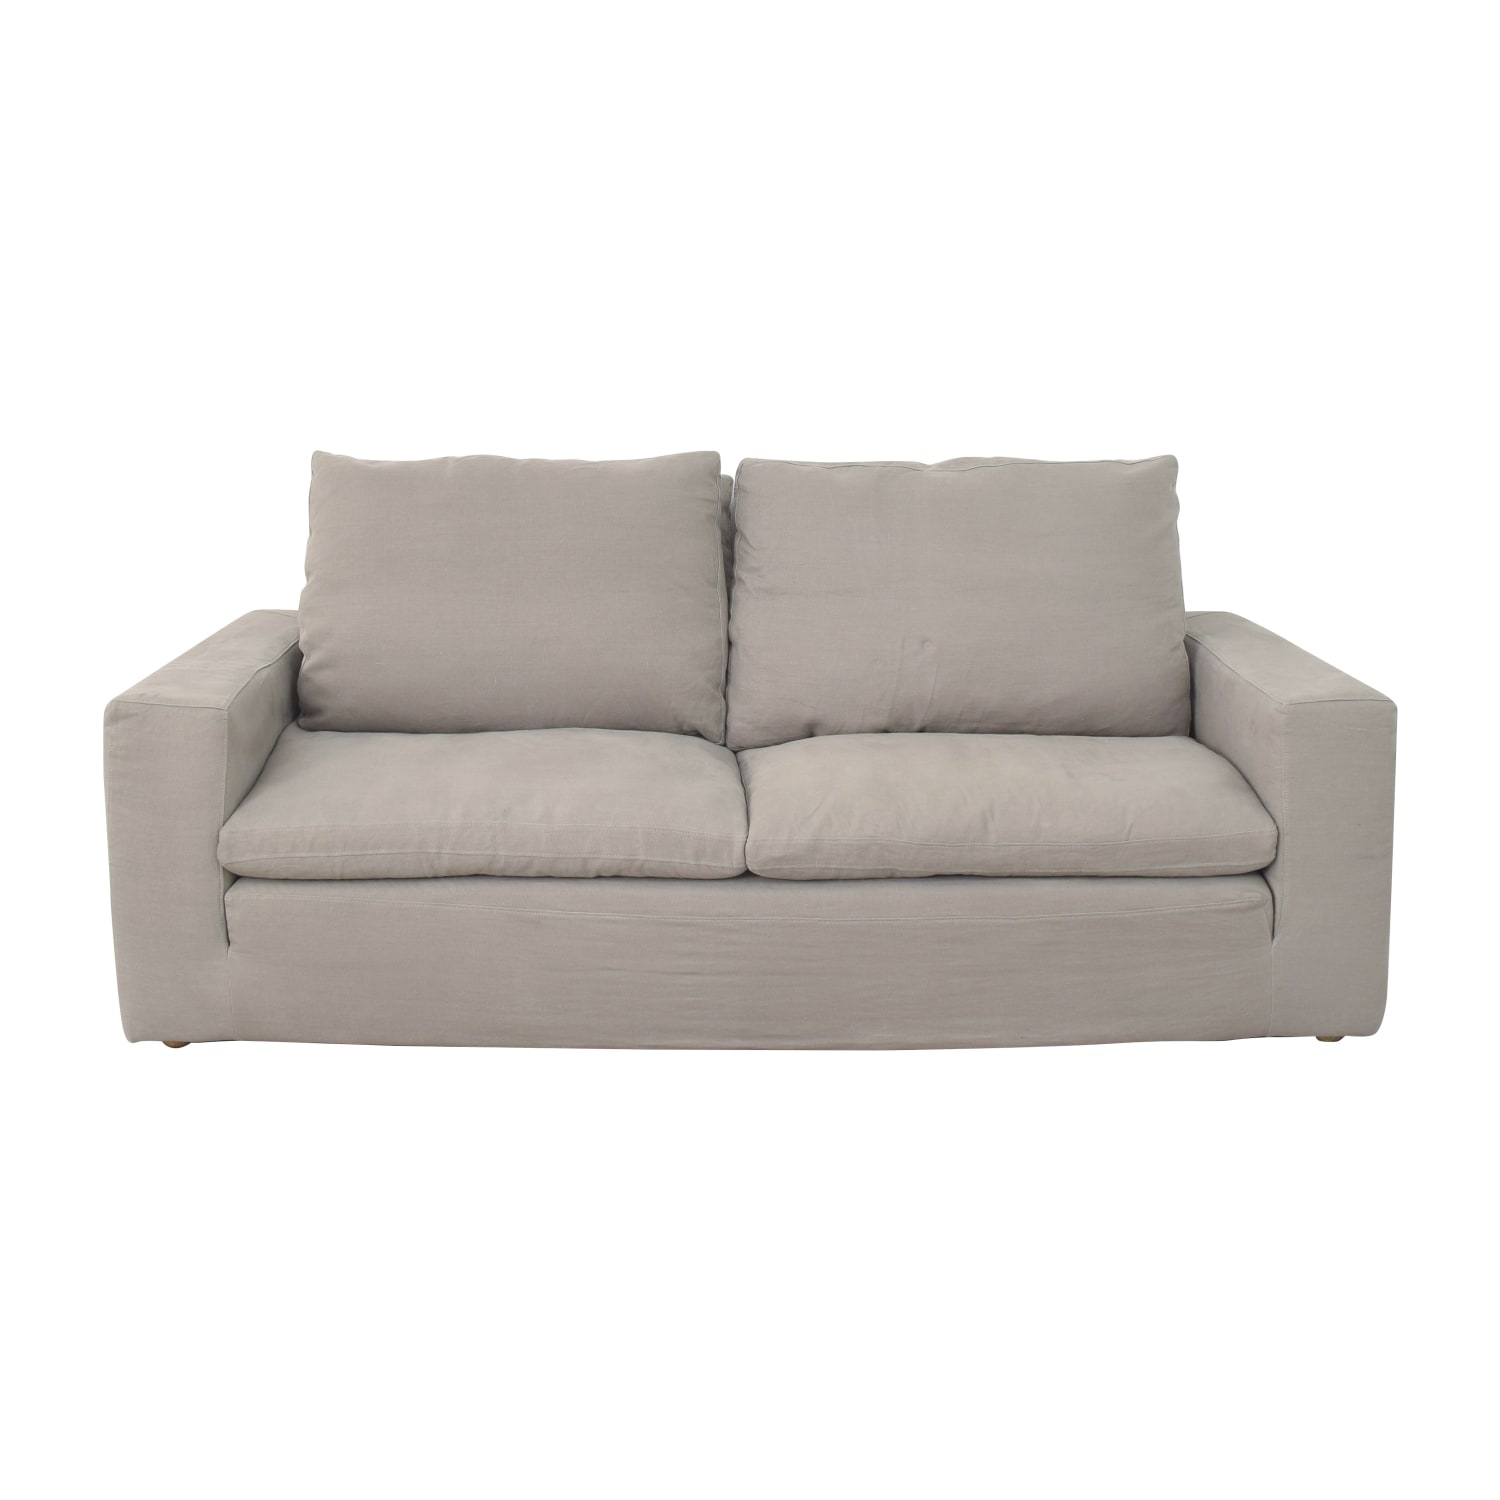 https://res.cloudinary.com/dkqtxtobb/image/upload/f_auto,q_auto:best,w_1500/product-assets/132364/restoration-hardware/sofas/classic-sofas/restoration-hardware-cloud-two-seat-cushion-sofa.jpeg